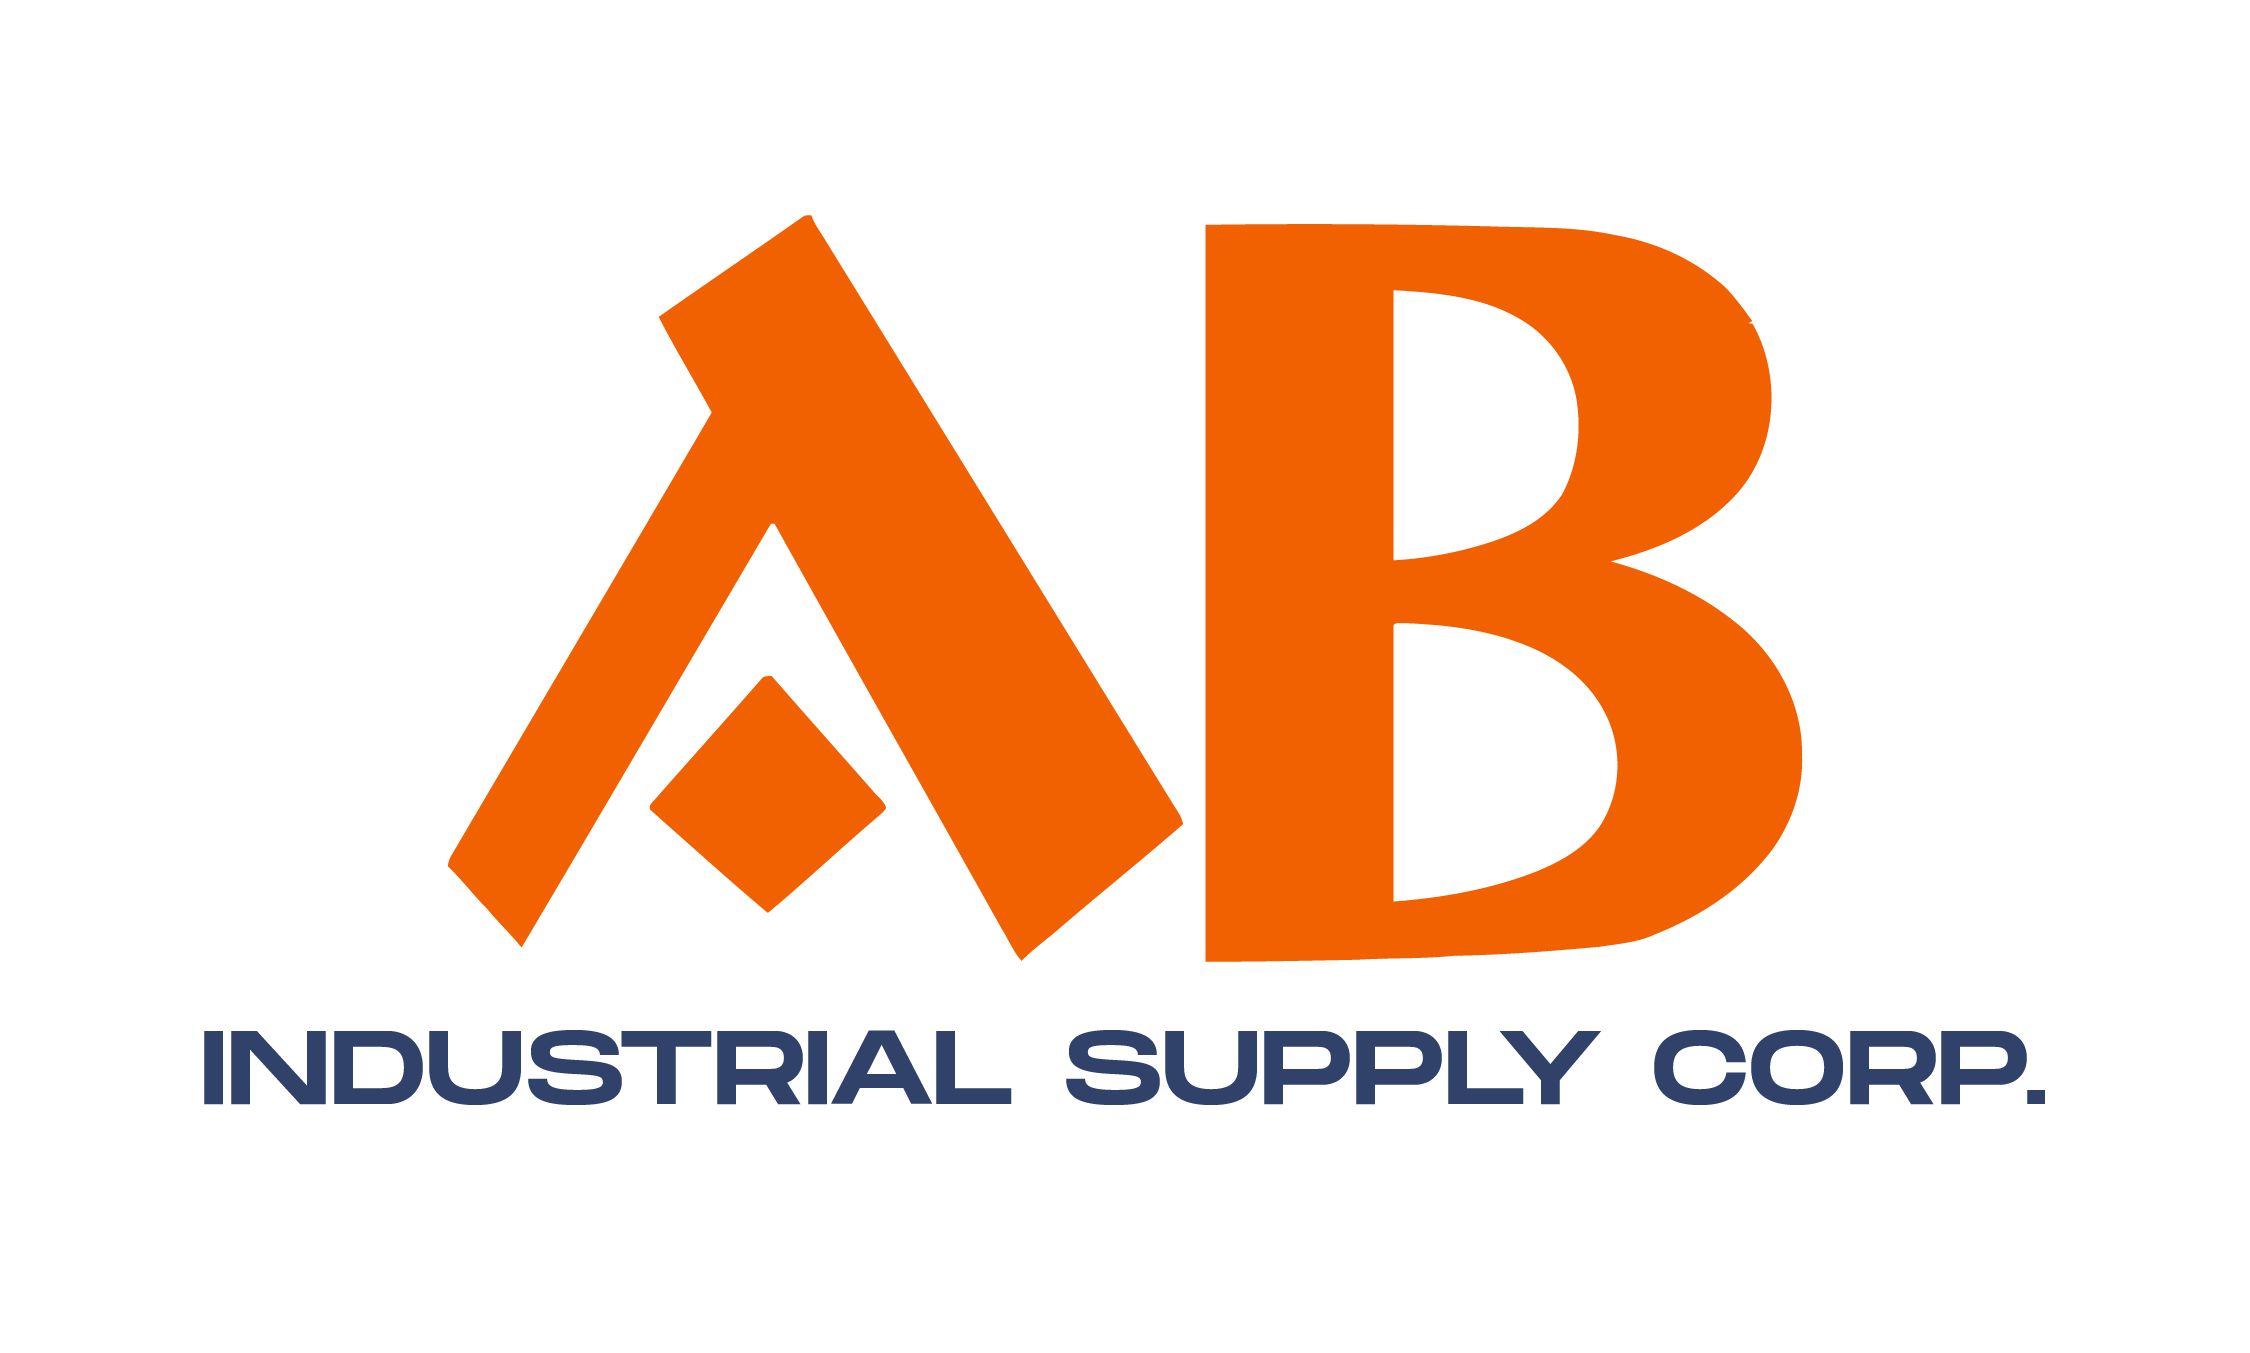 AB Industrial Supply